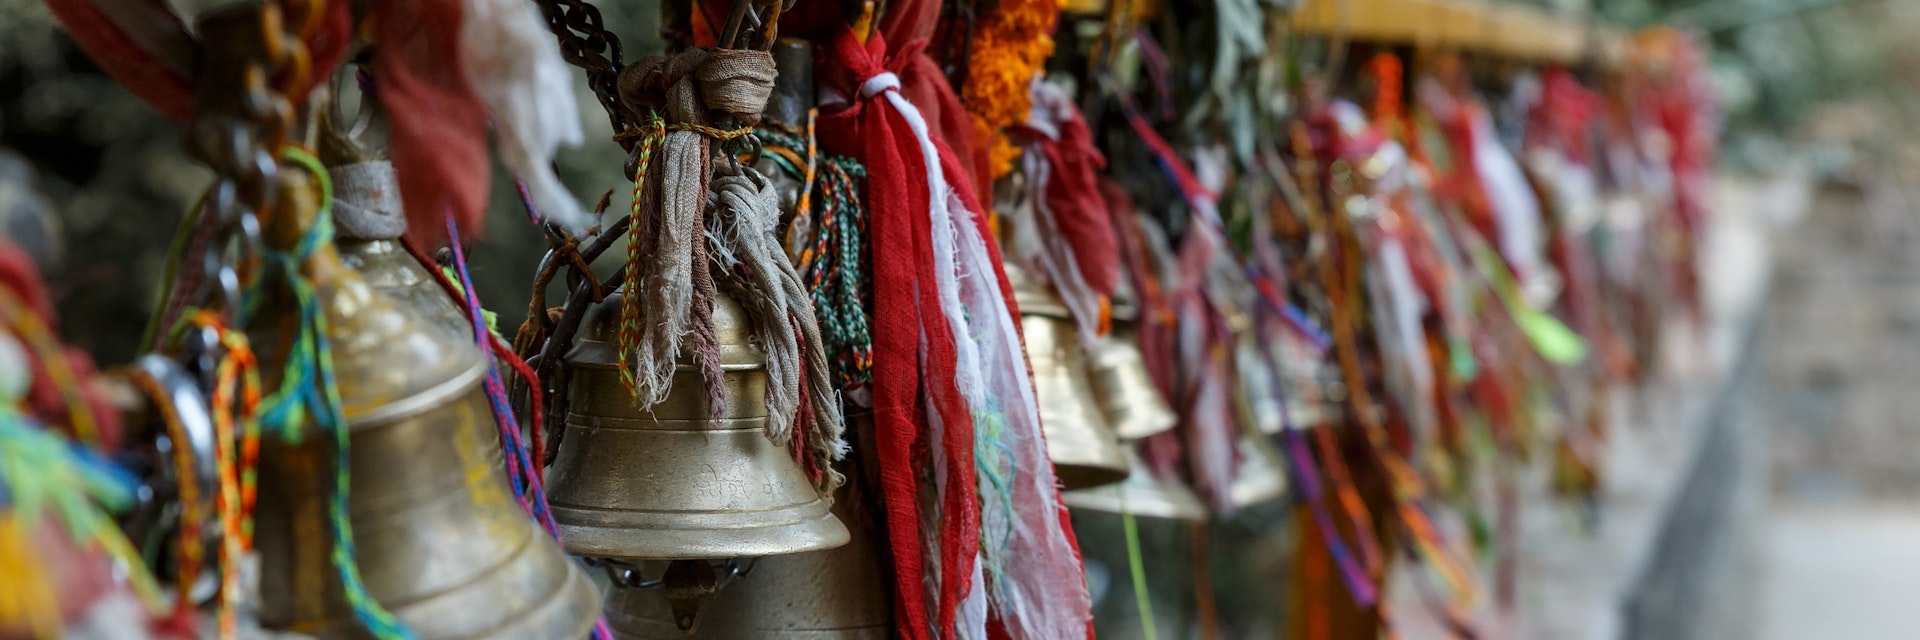 metal bells hang on chains in a Hindu temple. Dakshinkali Temple in Pharping, Nepal.